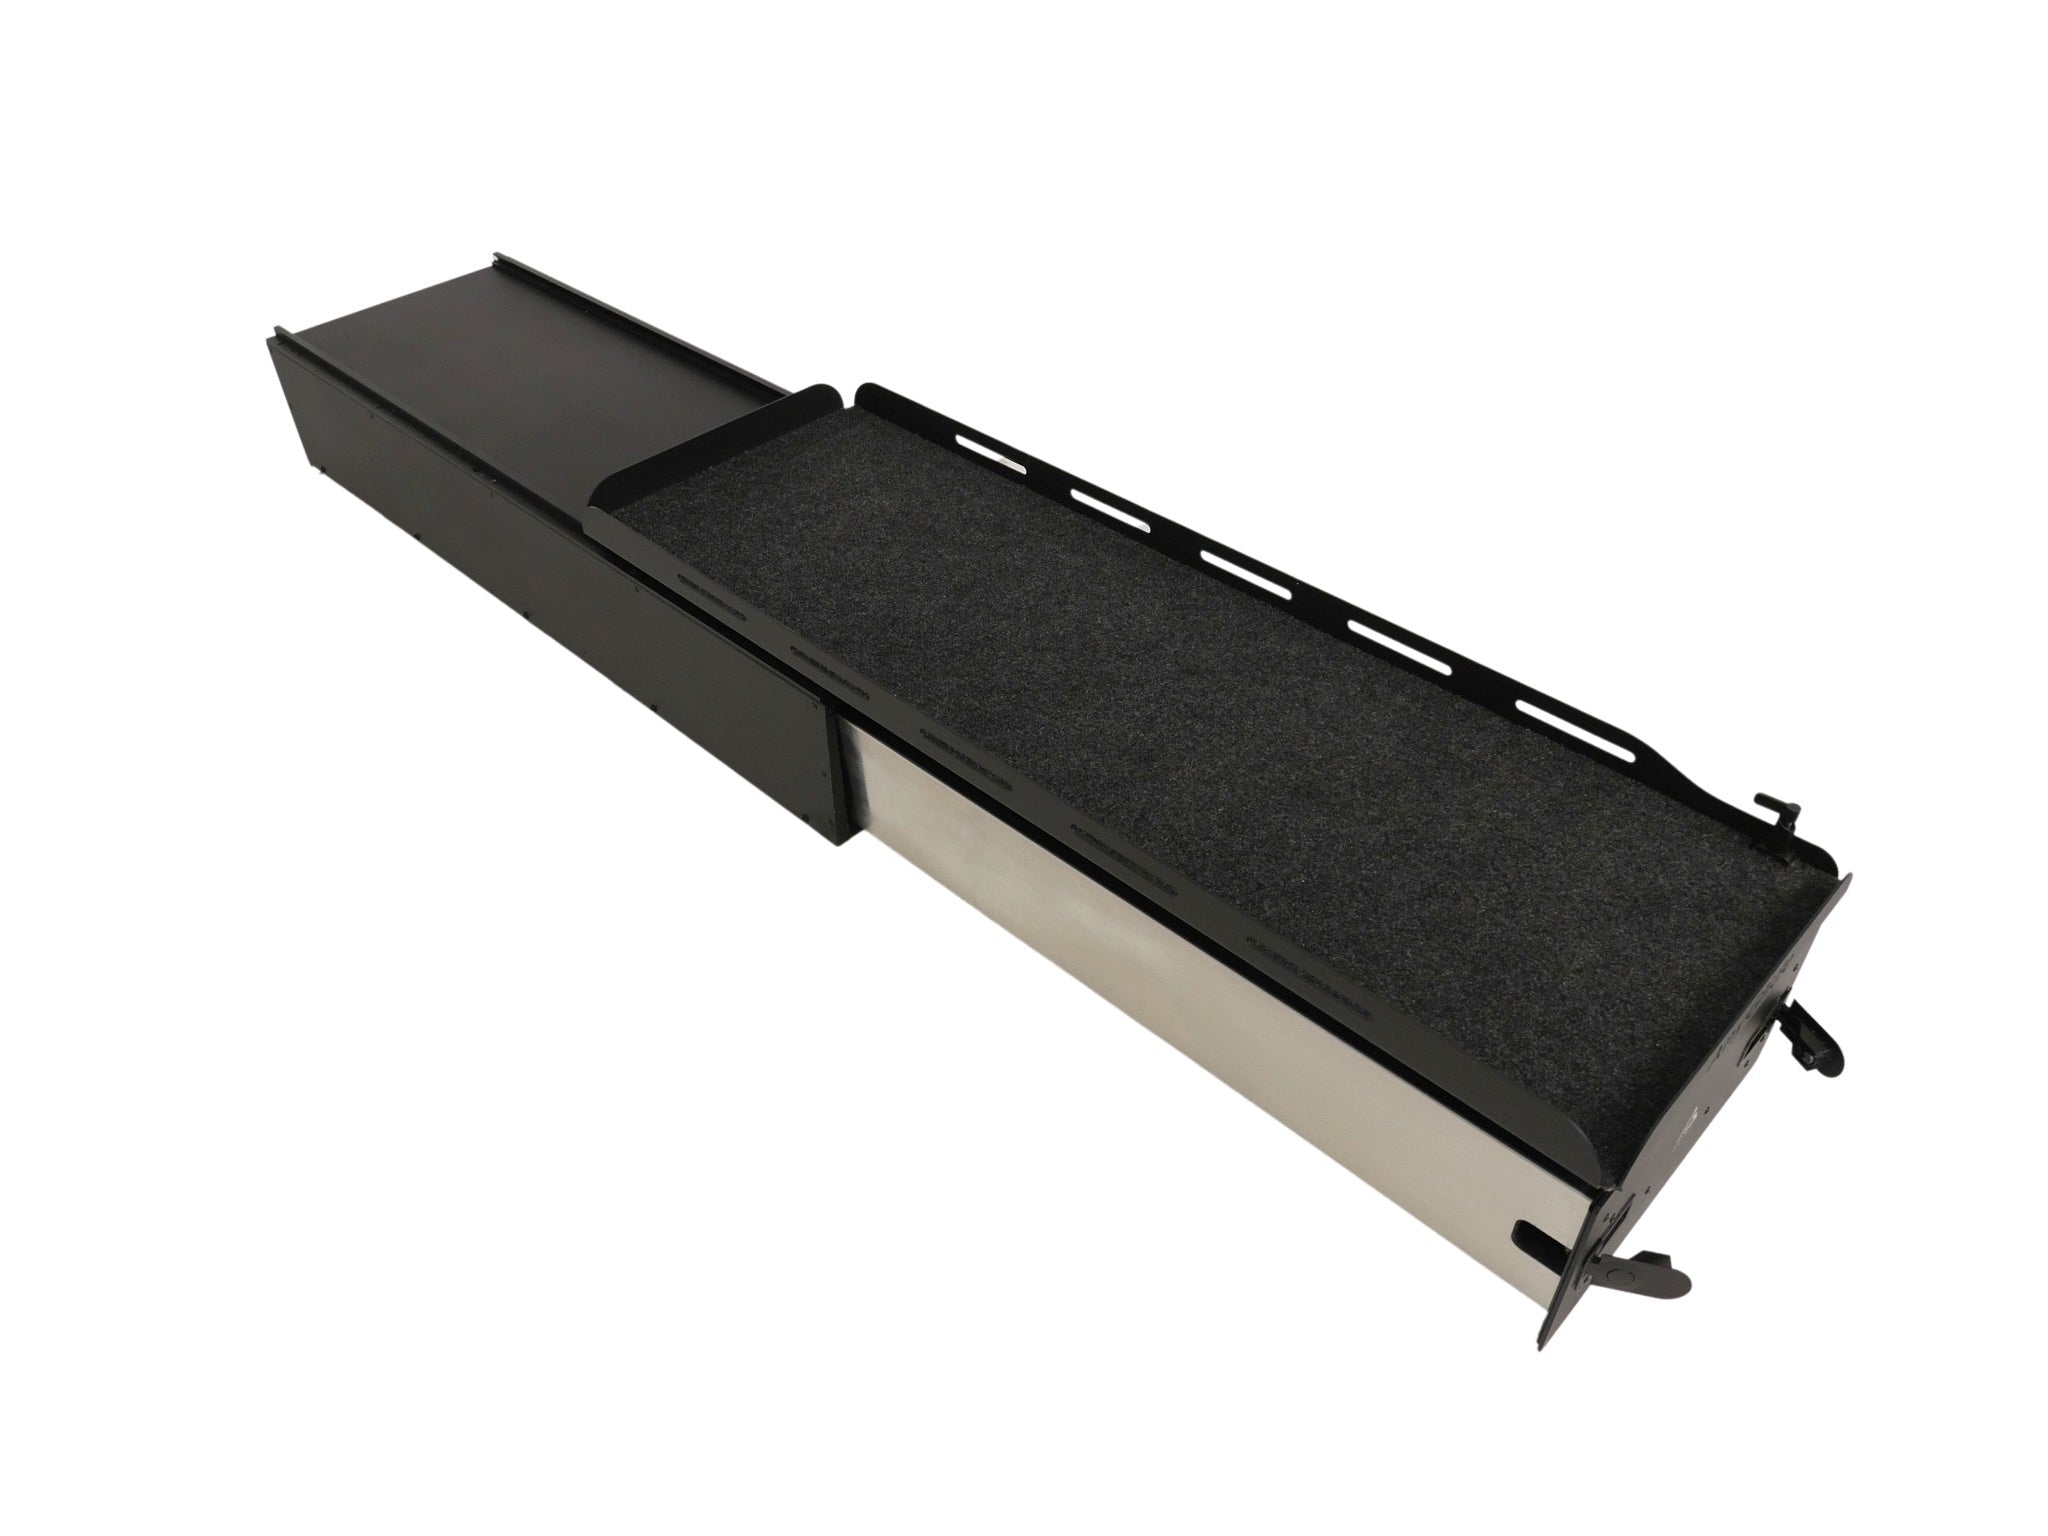 Standard 60 SxS Top Bed Storage Solution